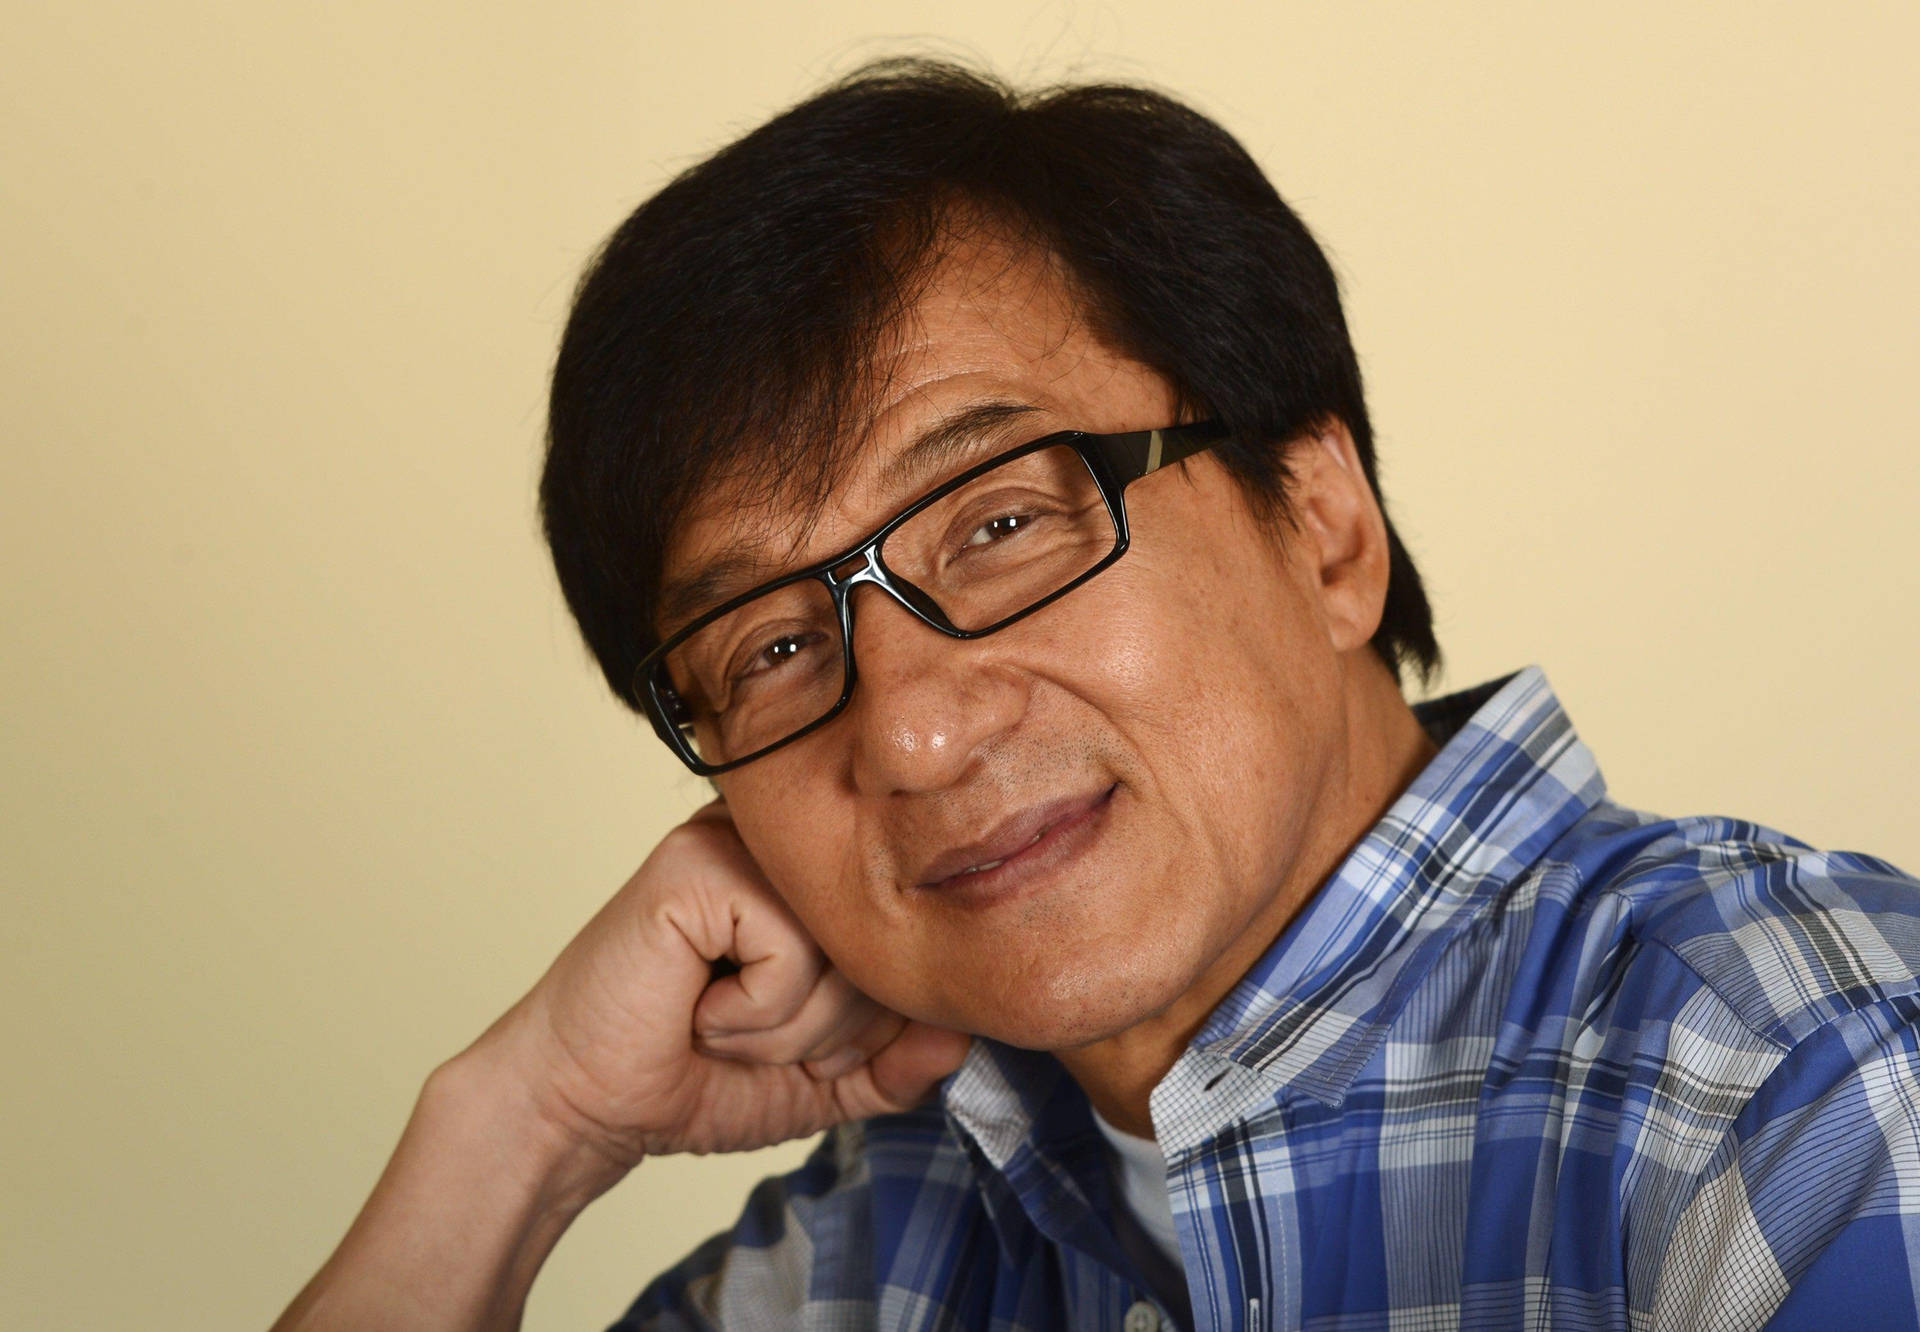 Adorable Jackie Chan Wallpaper